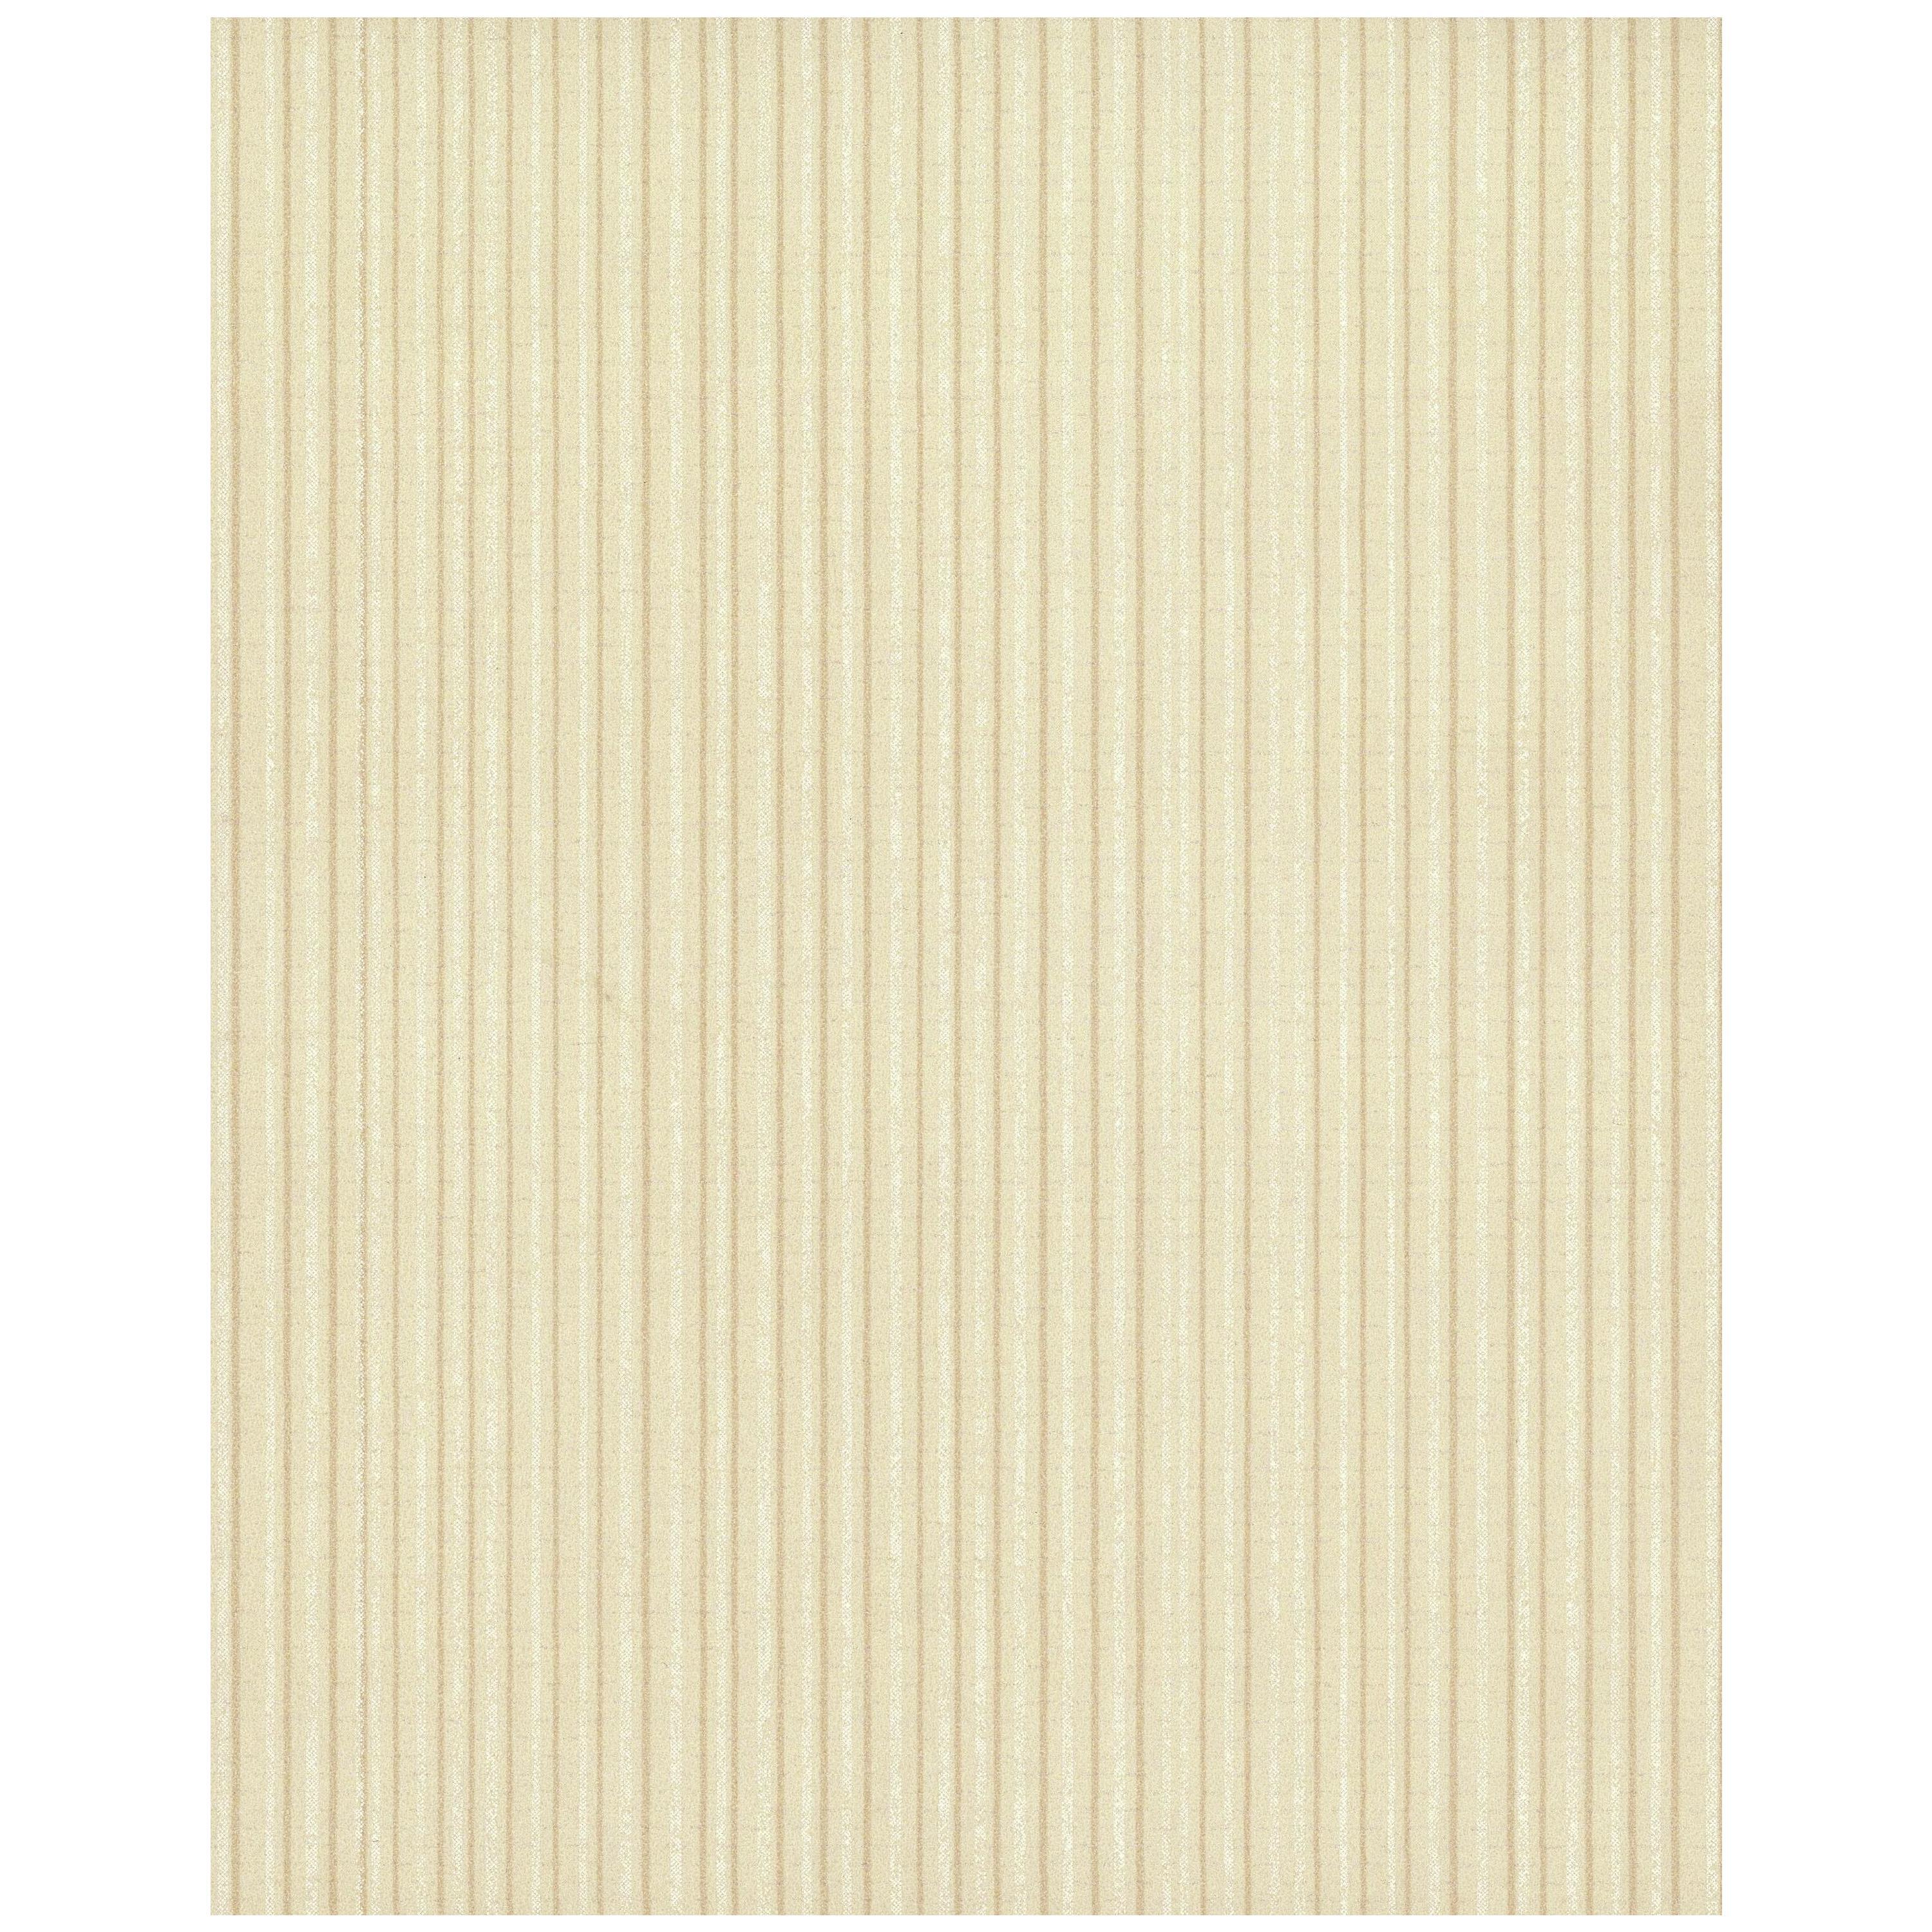 3000 x 3000 · jpeg - York Wallcoverings Ticking Stripe Beige Non-Woven Wallpaper - Walmart ...